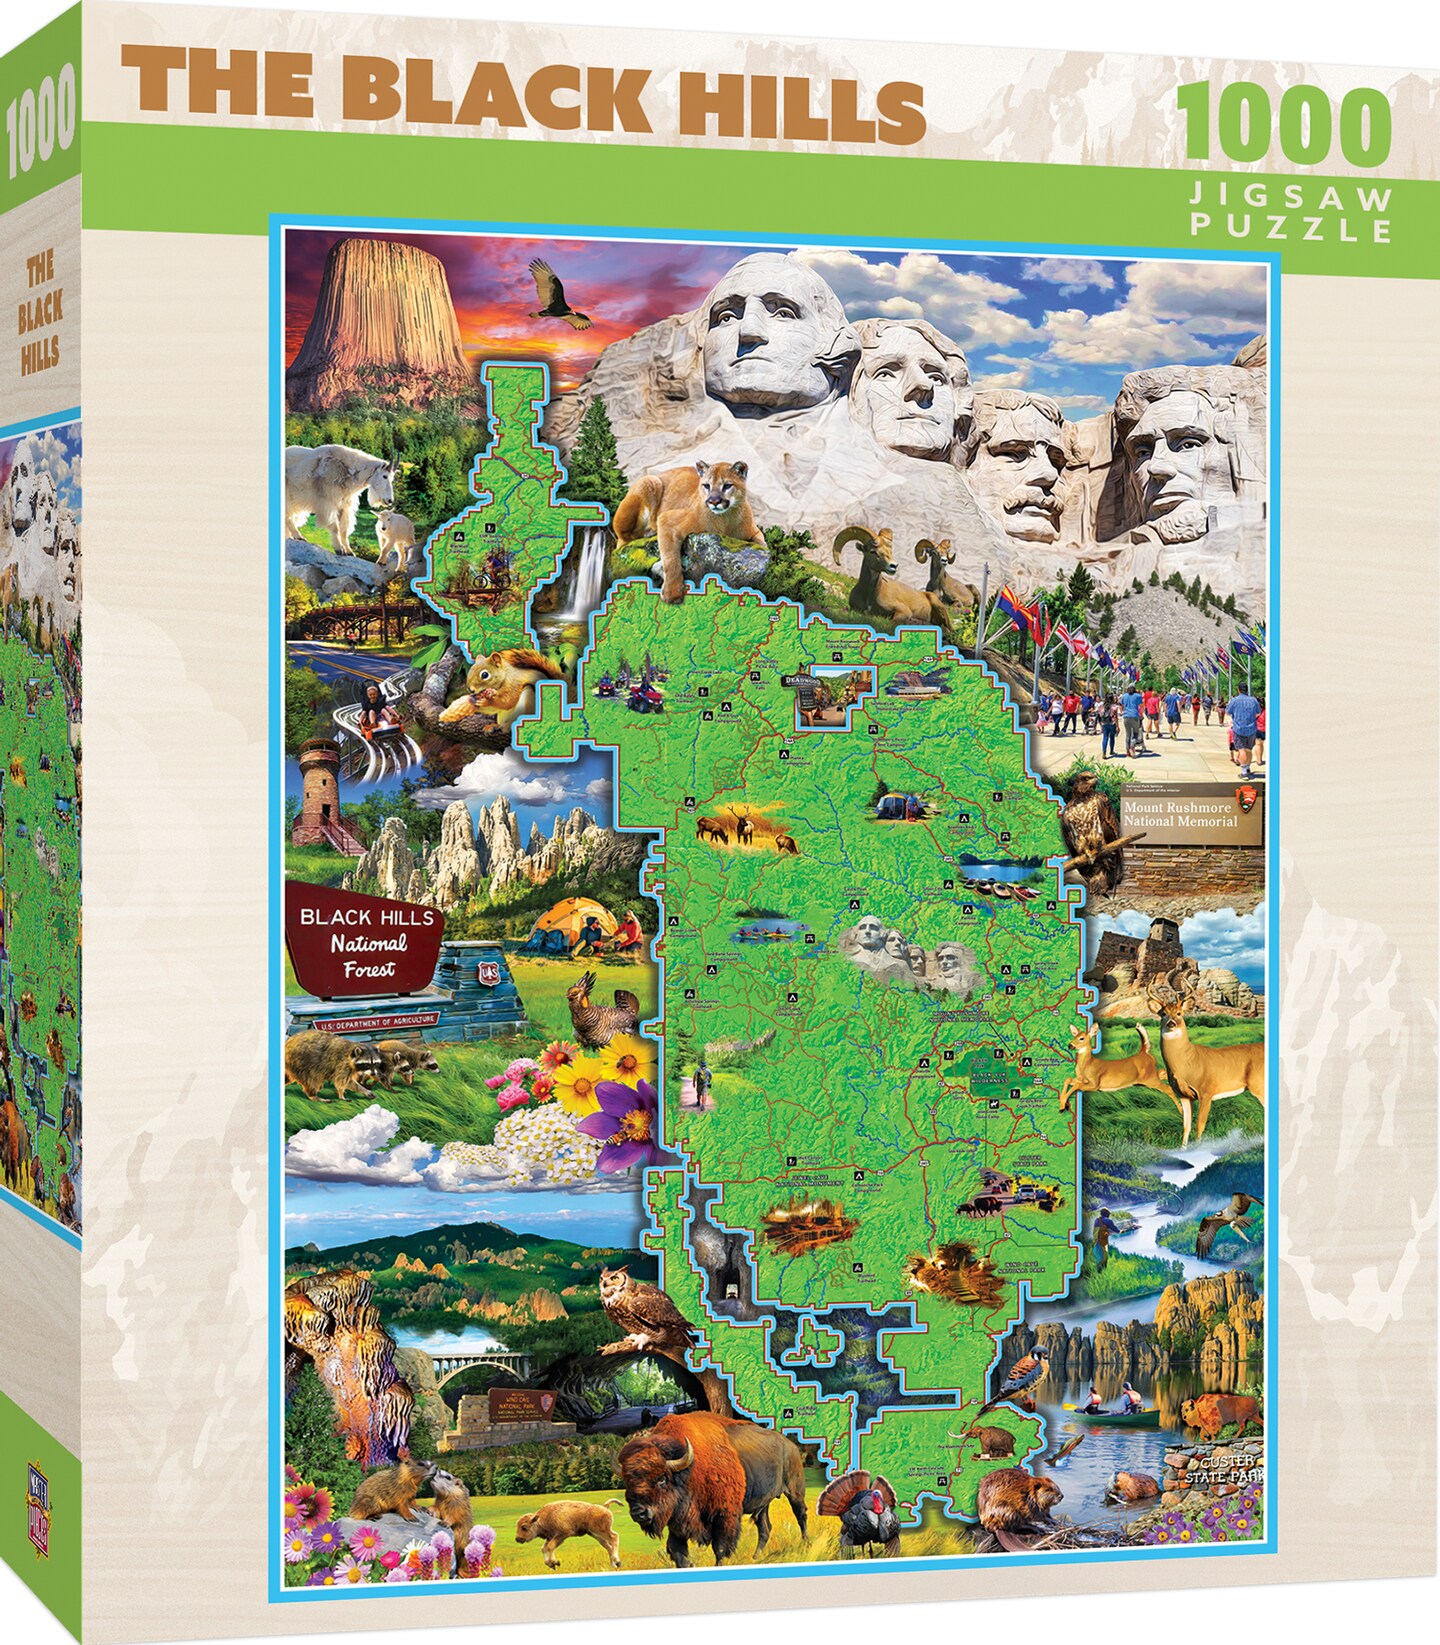 MasterPieces 1000 Piece Jigsaw Puzzle - National Parks - 19.25x26.75